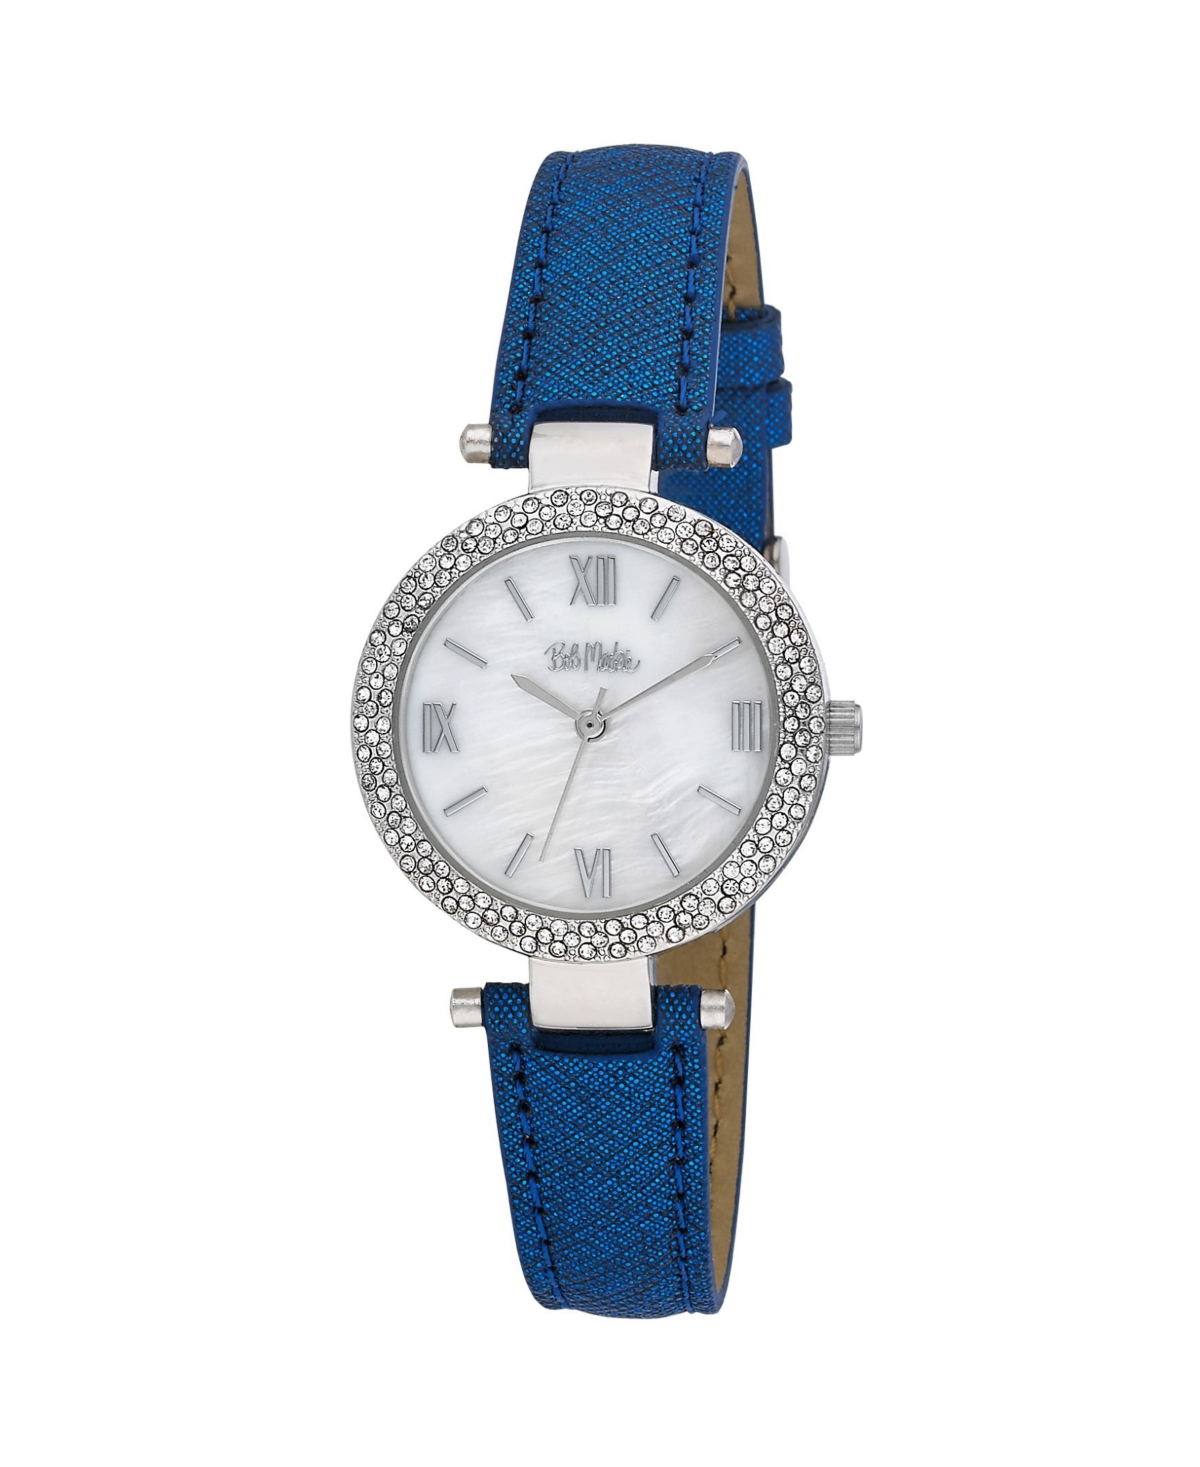 Bob Mackie Women's Blue Polyurethane Strap Glitz Mop Dial Watch, 30mm